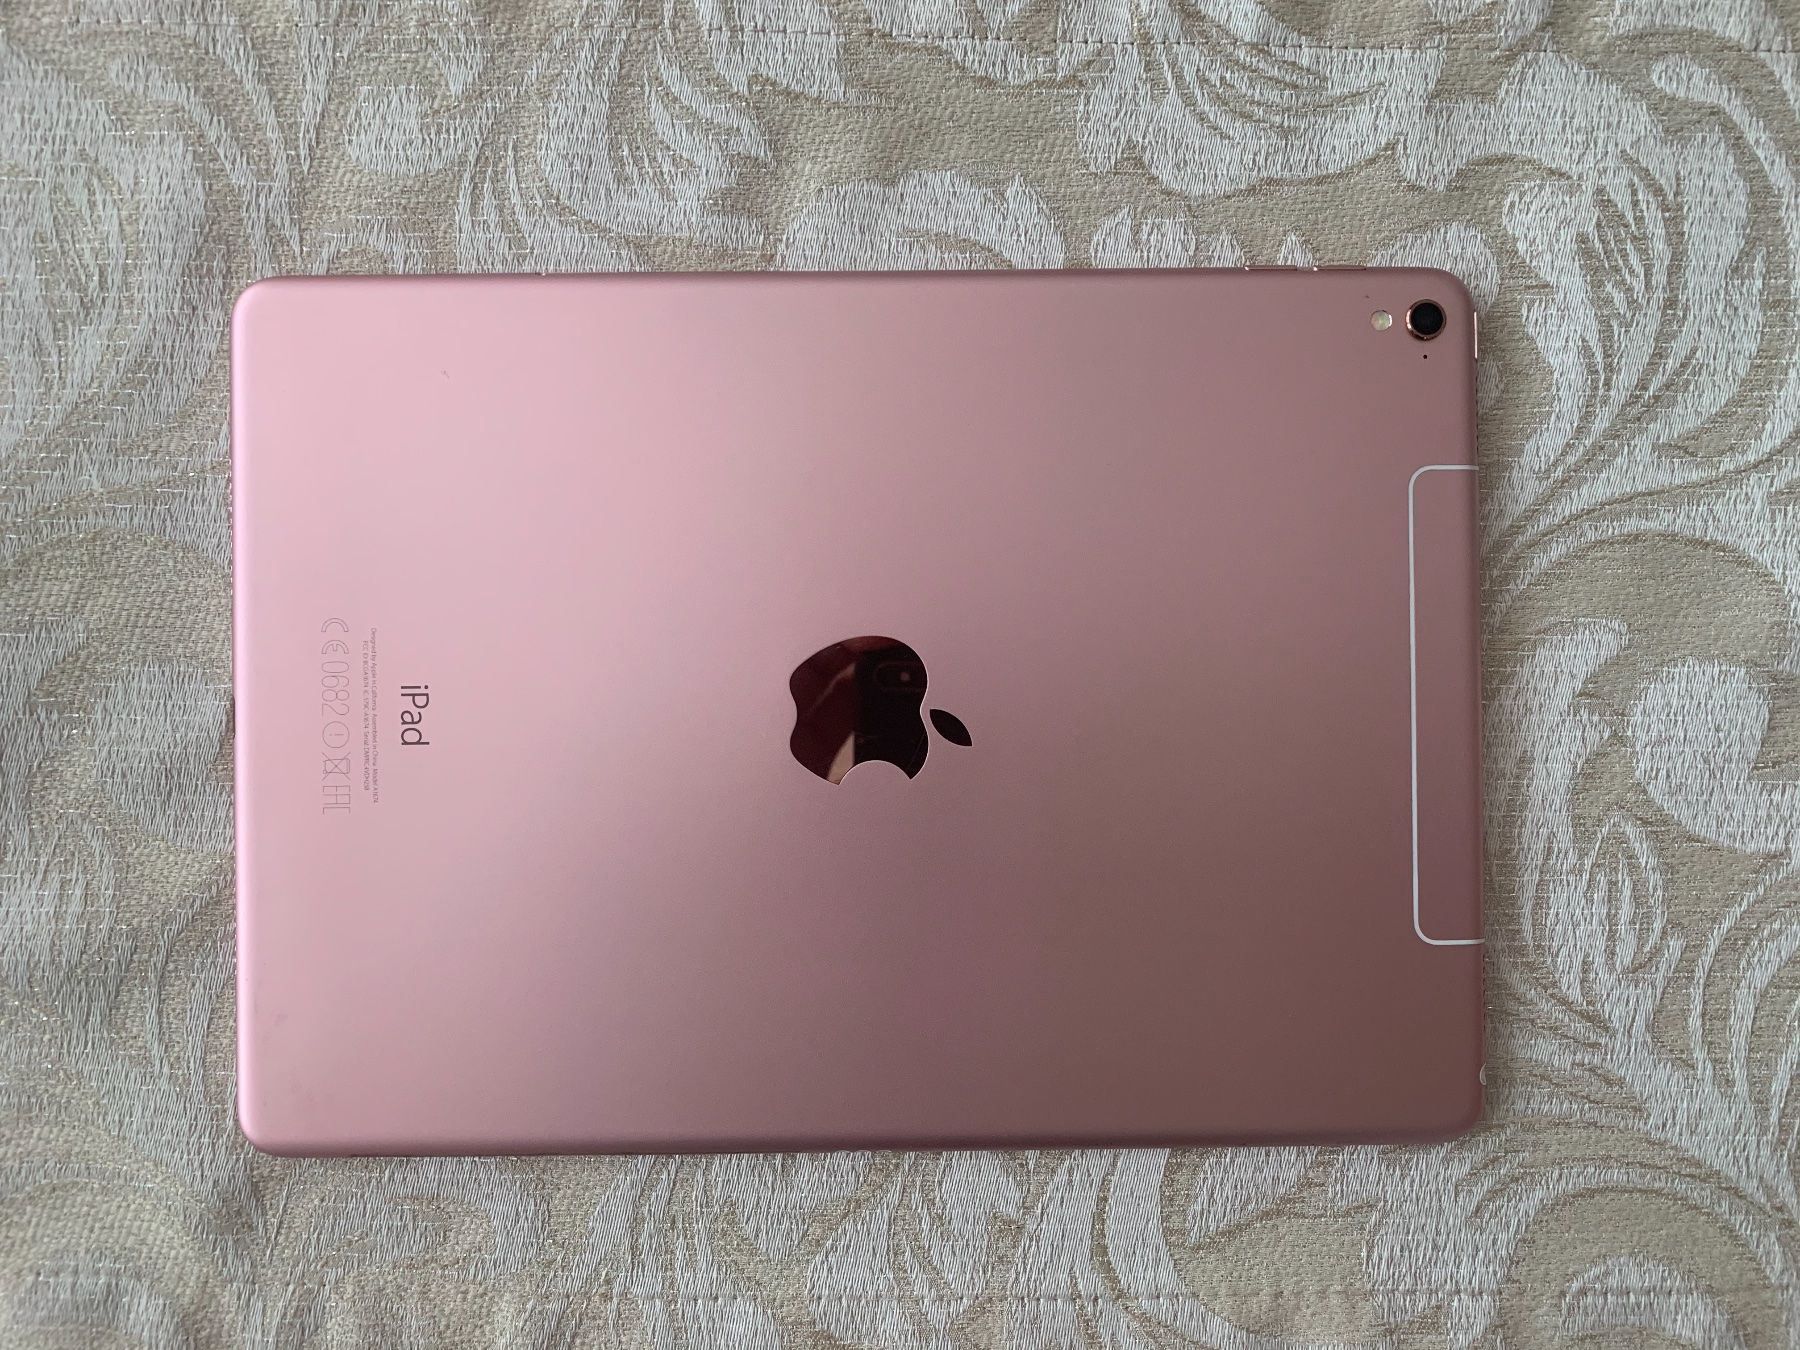 iPad Pro (9.7-inch, Wi-Fi + Cellular) kaufen auf Ricardo